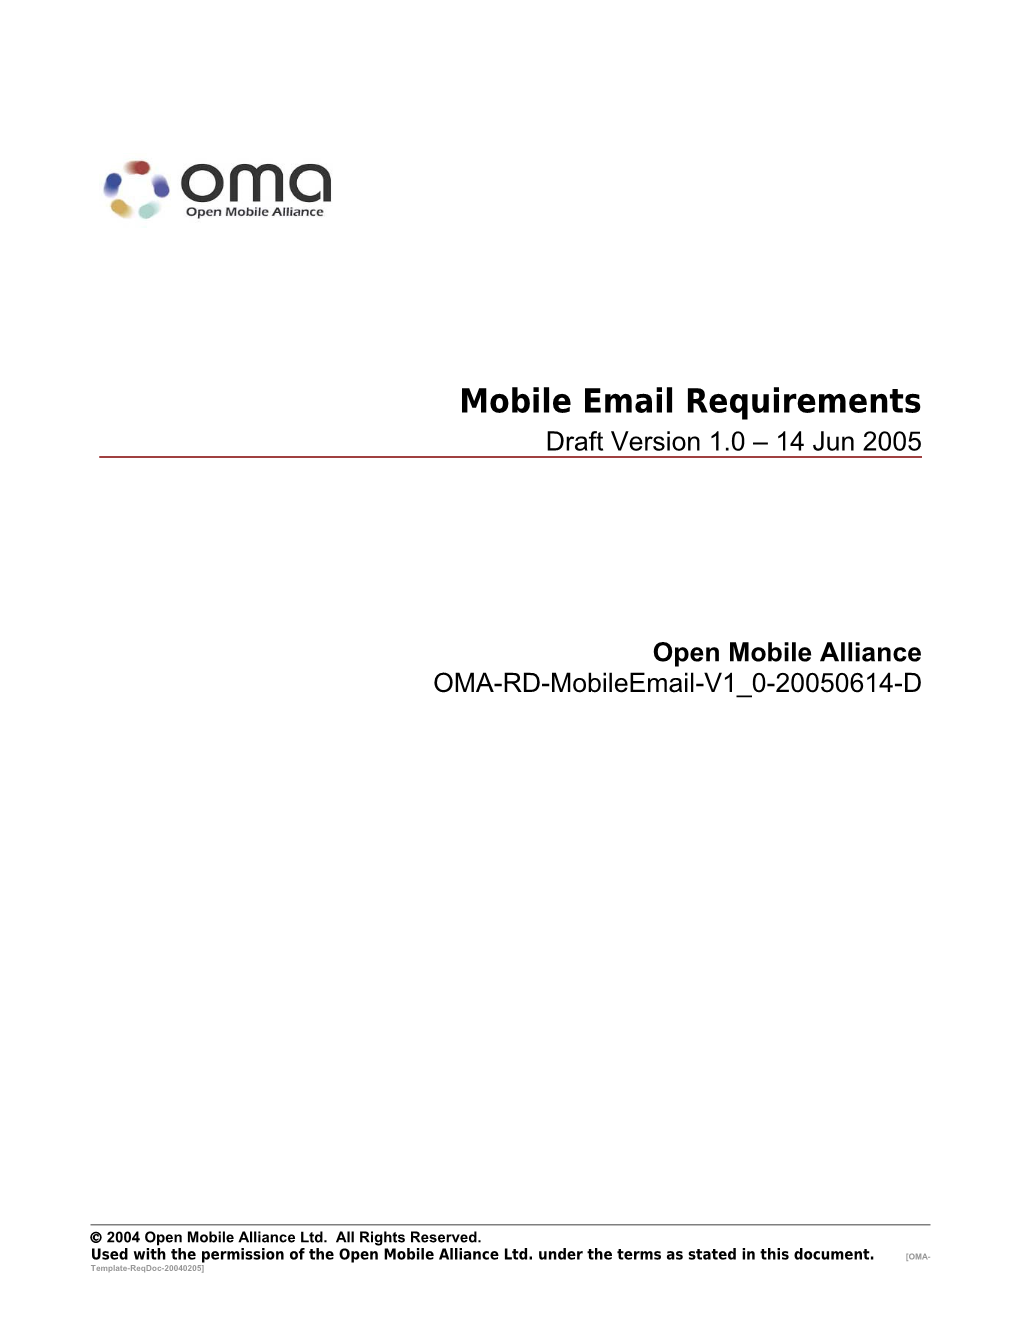 OMA-RD-Mobileemail-V1 0-20050614-Dpage 1 V(50)